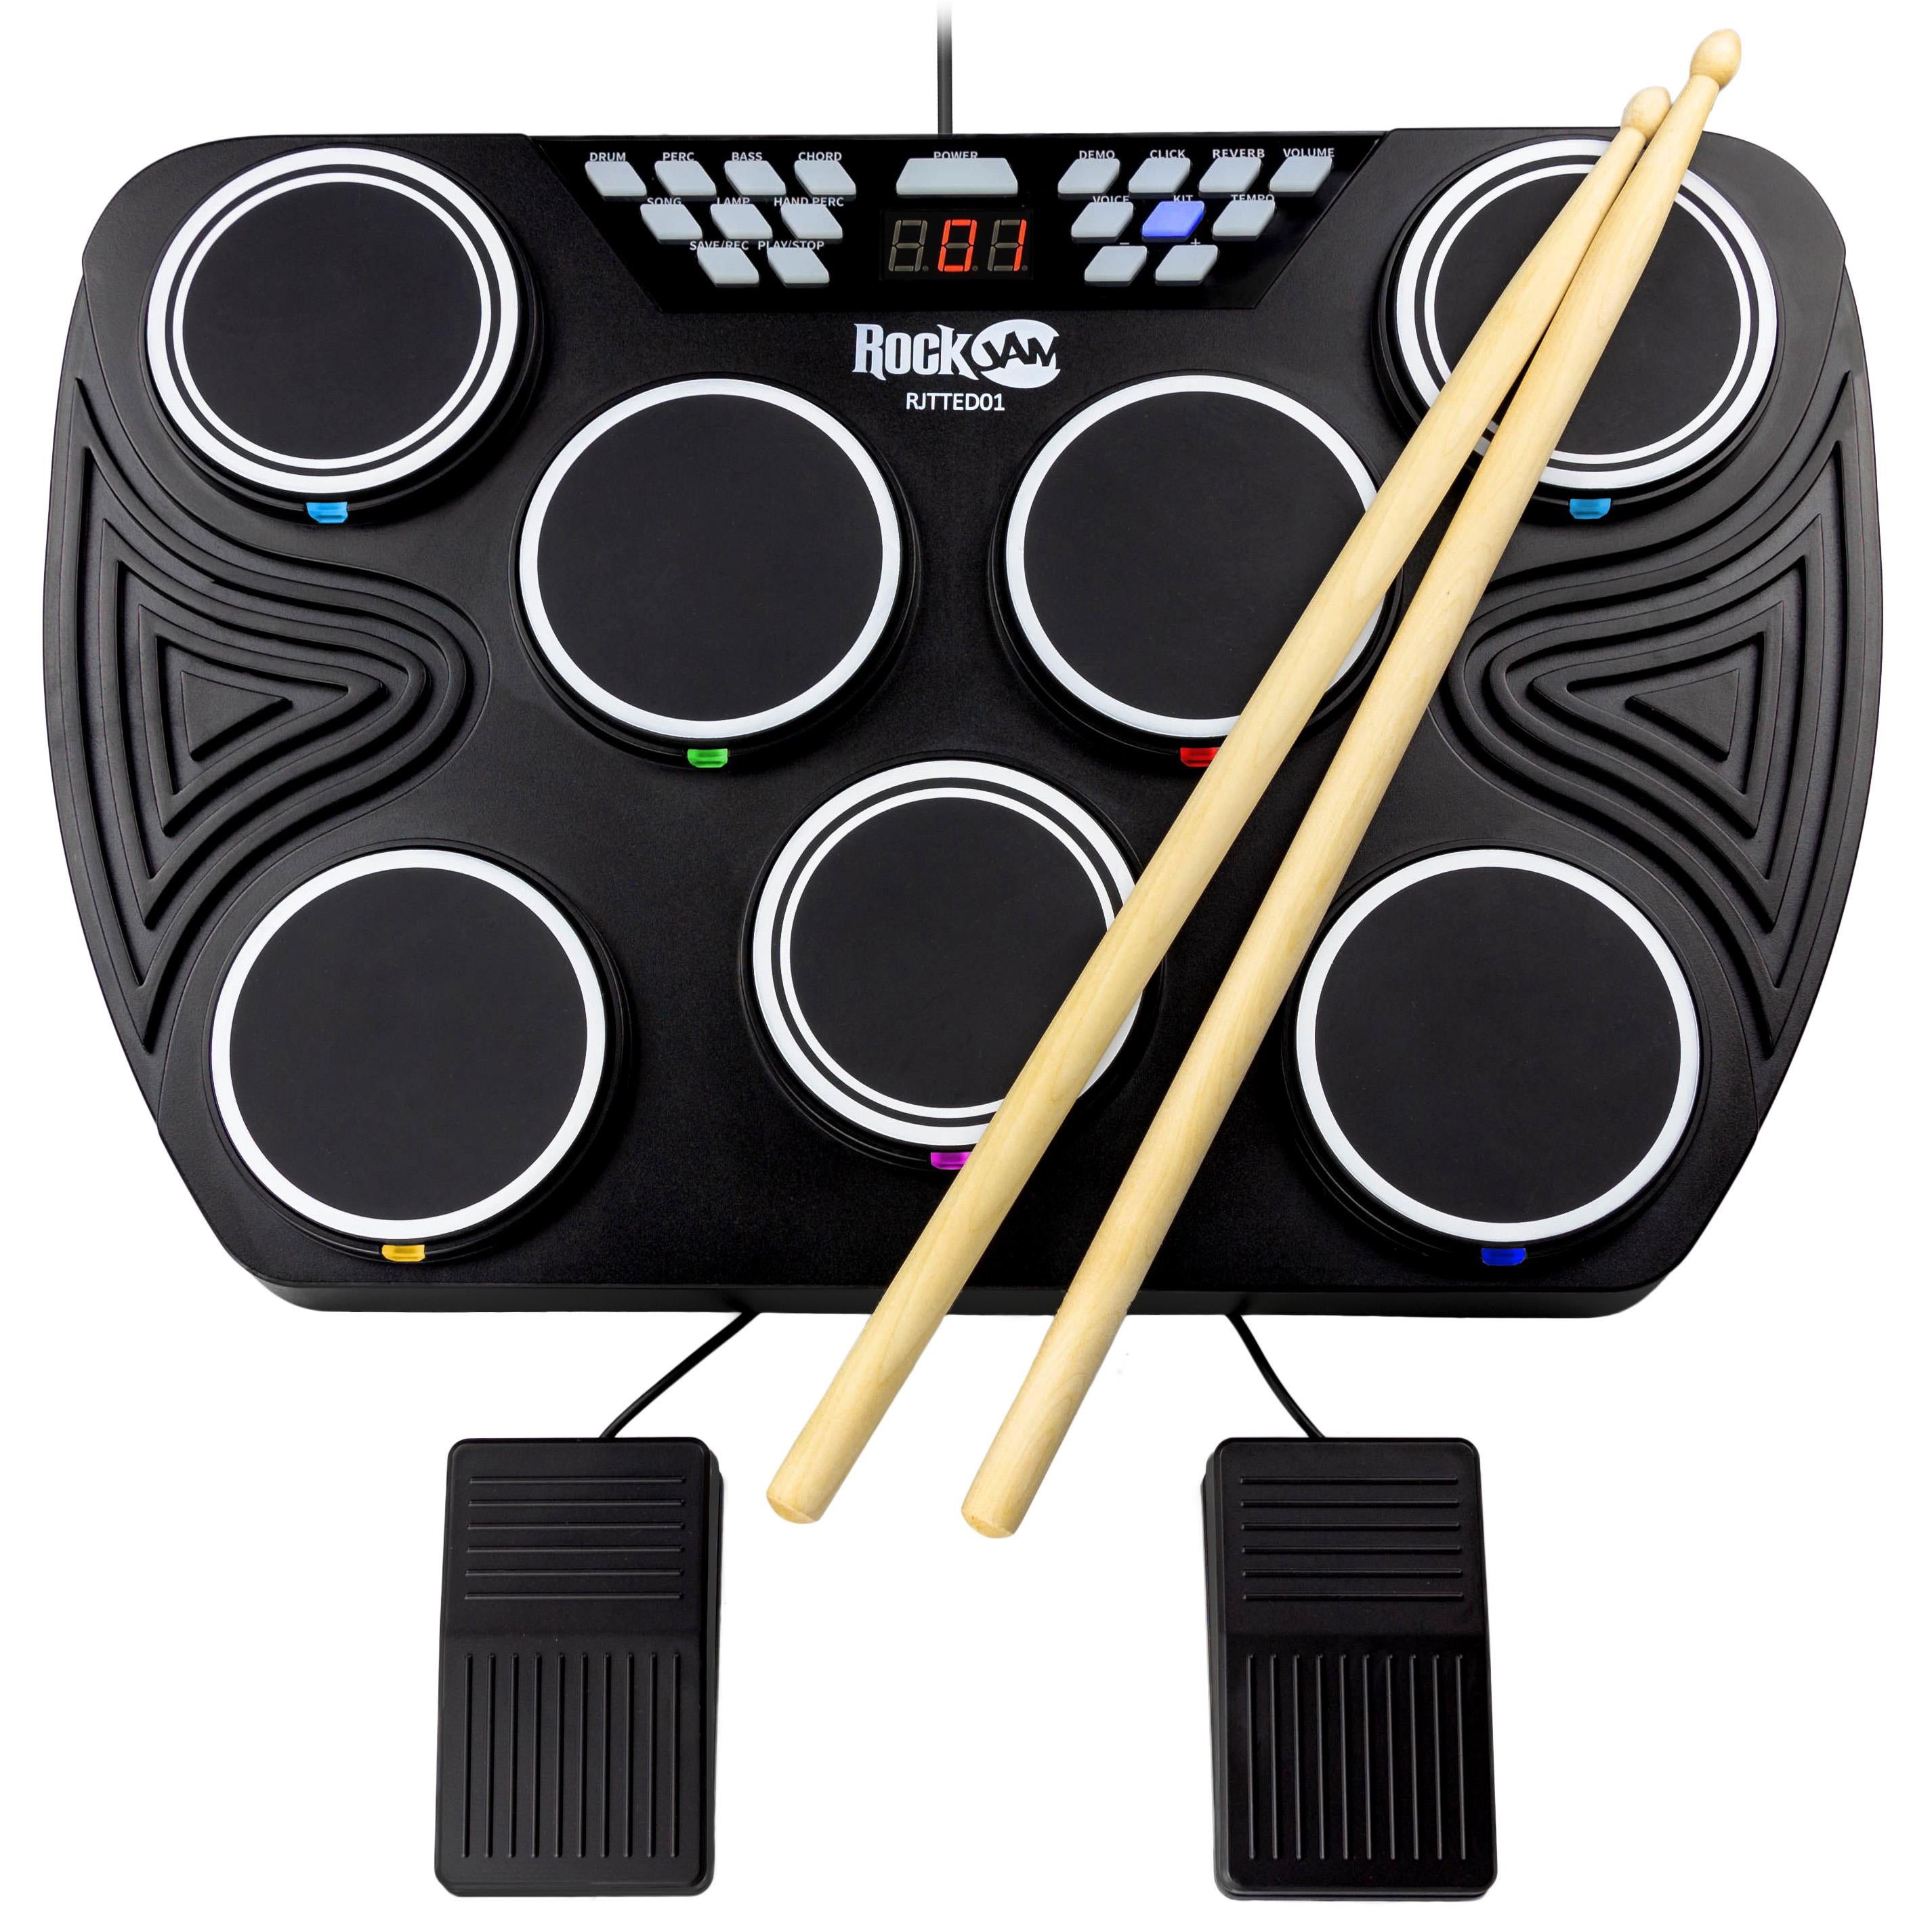 Tabletop 7 Pad Electronic MIDI Bluetooth Drum Kit w/ Built-in Speakers